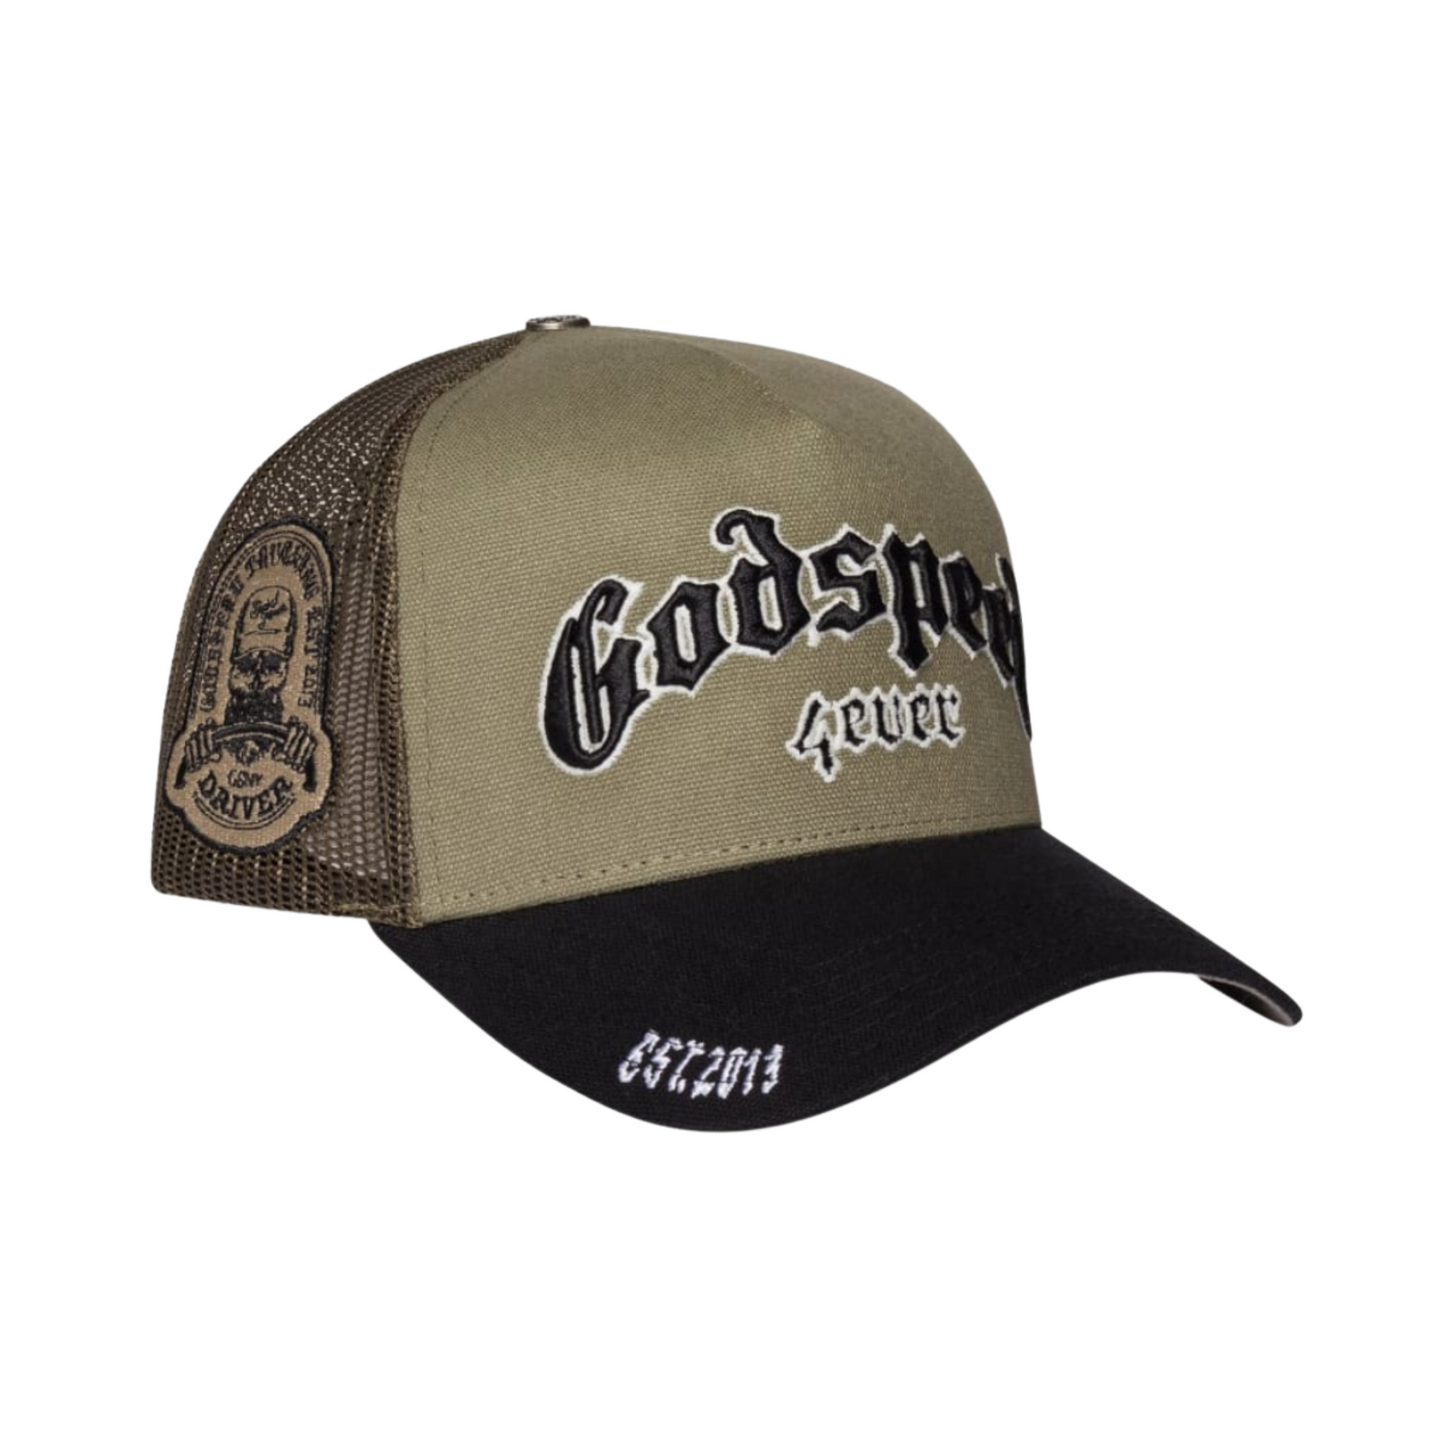 Godspeed Forever Trucker Hat (Olive/Black)